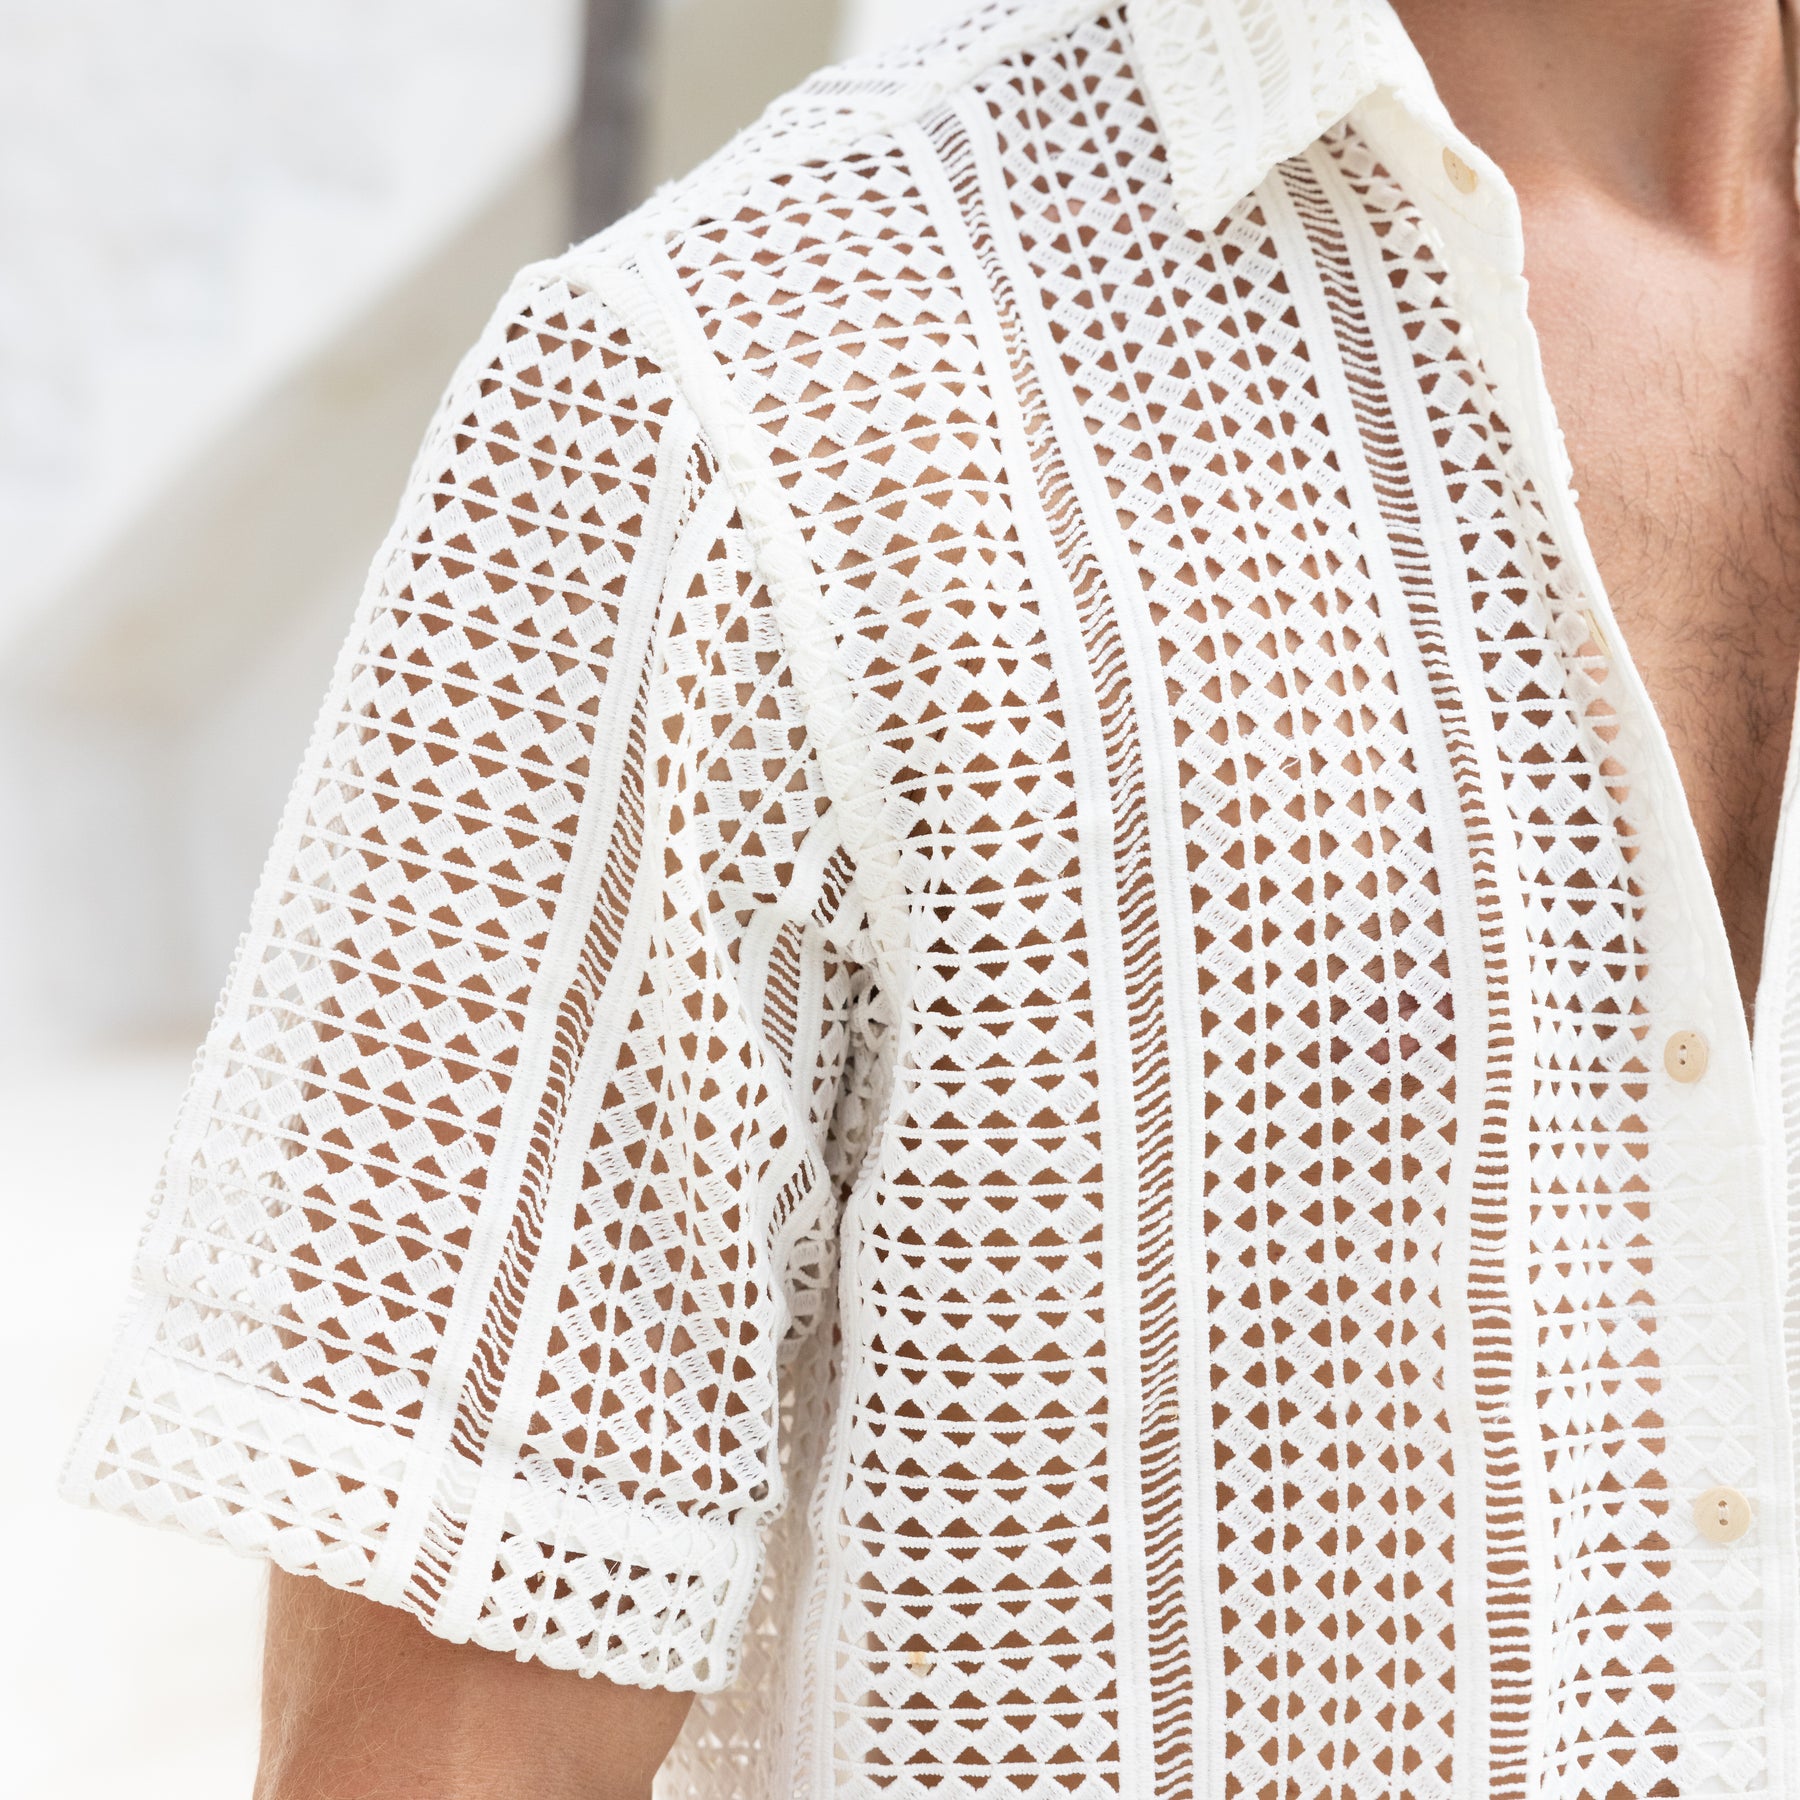 The Best Men's Crochet Shirts, Textured Shirts & Woven Knit Polos ...